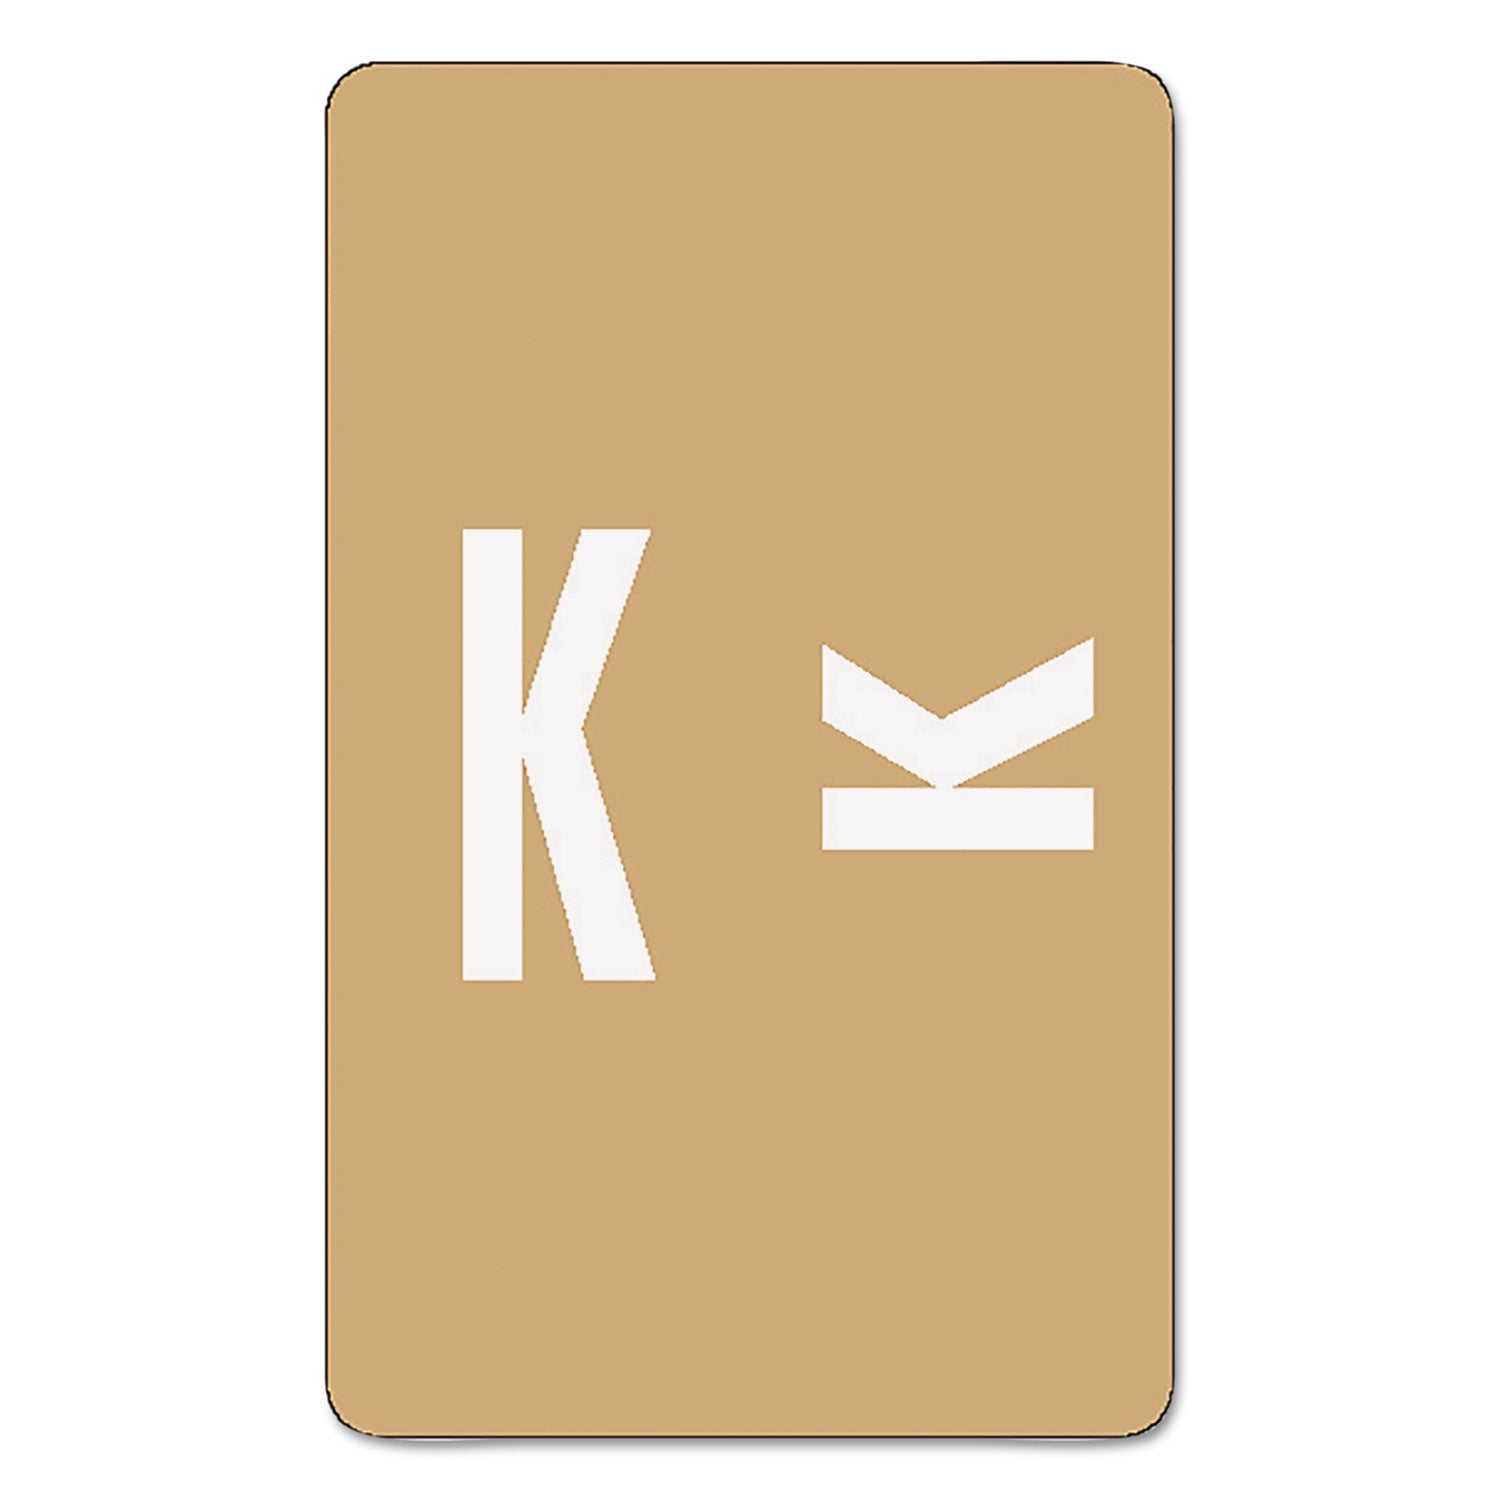 AlphaZ Color-Coded Second Letter Alphabetical Labels, K, 1 x 1.63, Light Brown, 10/Sheet, 10 Sheets/Pack - 